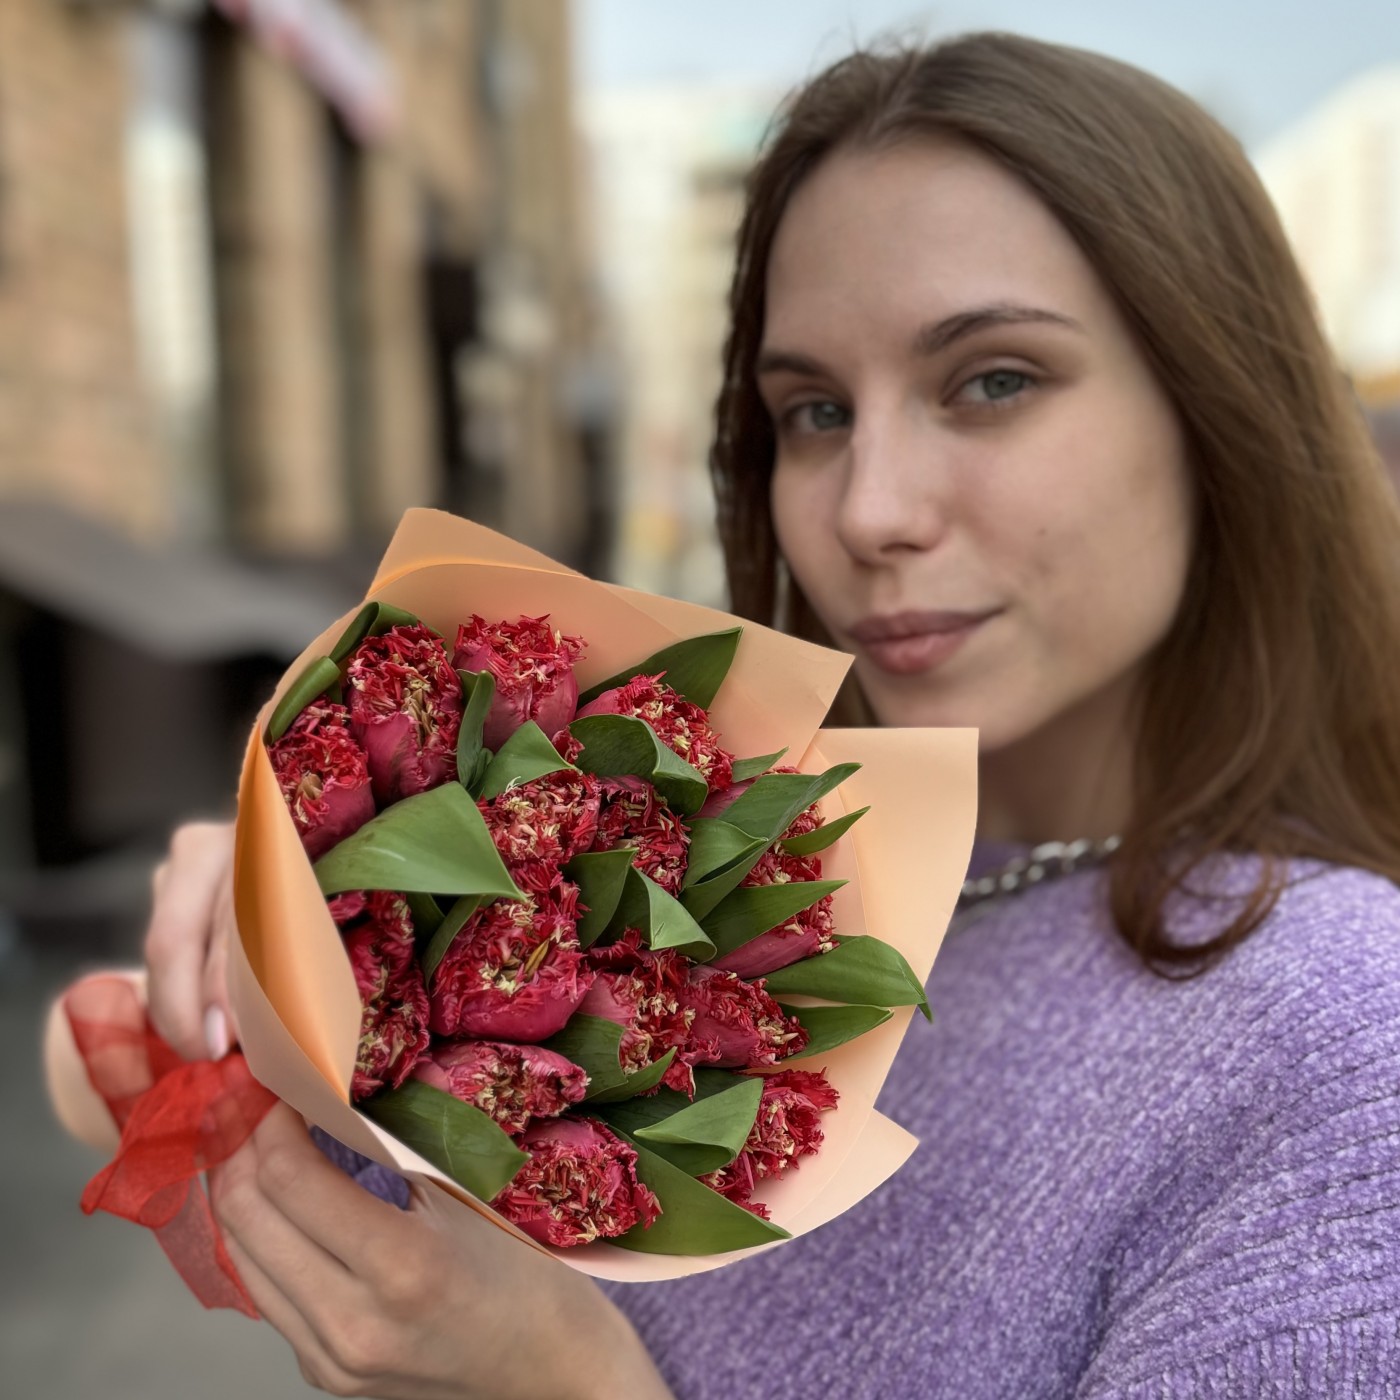 15 махровых красных тюльпанов Ля мур